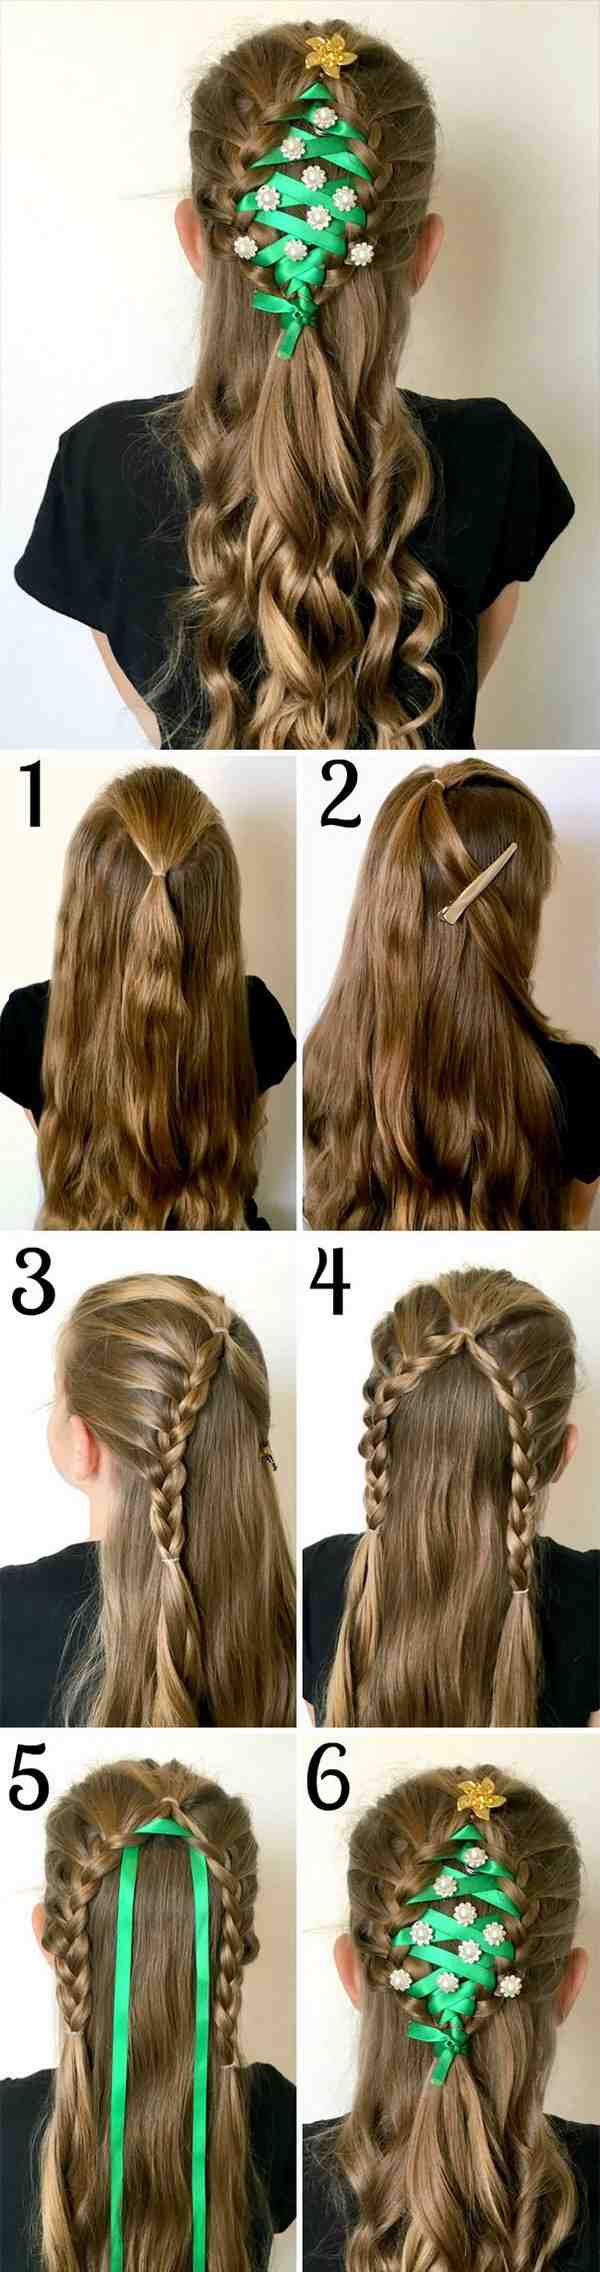 best christmas hair ideas for girls with long hair